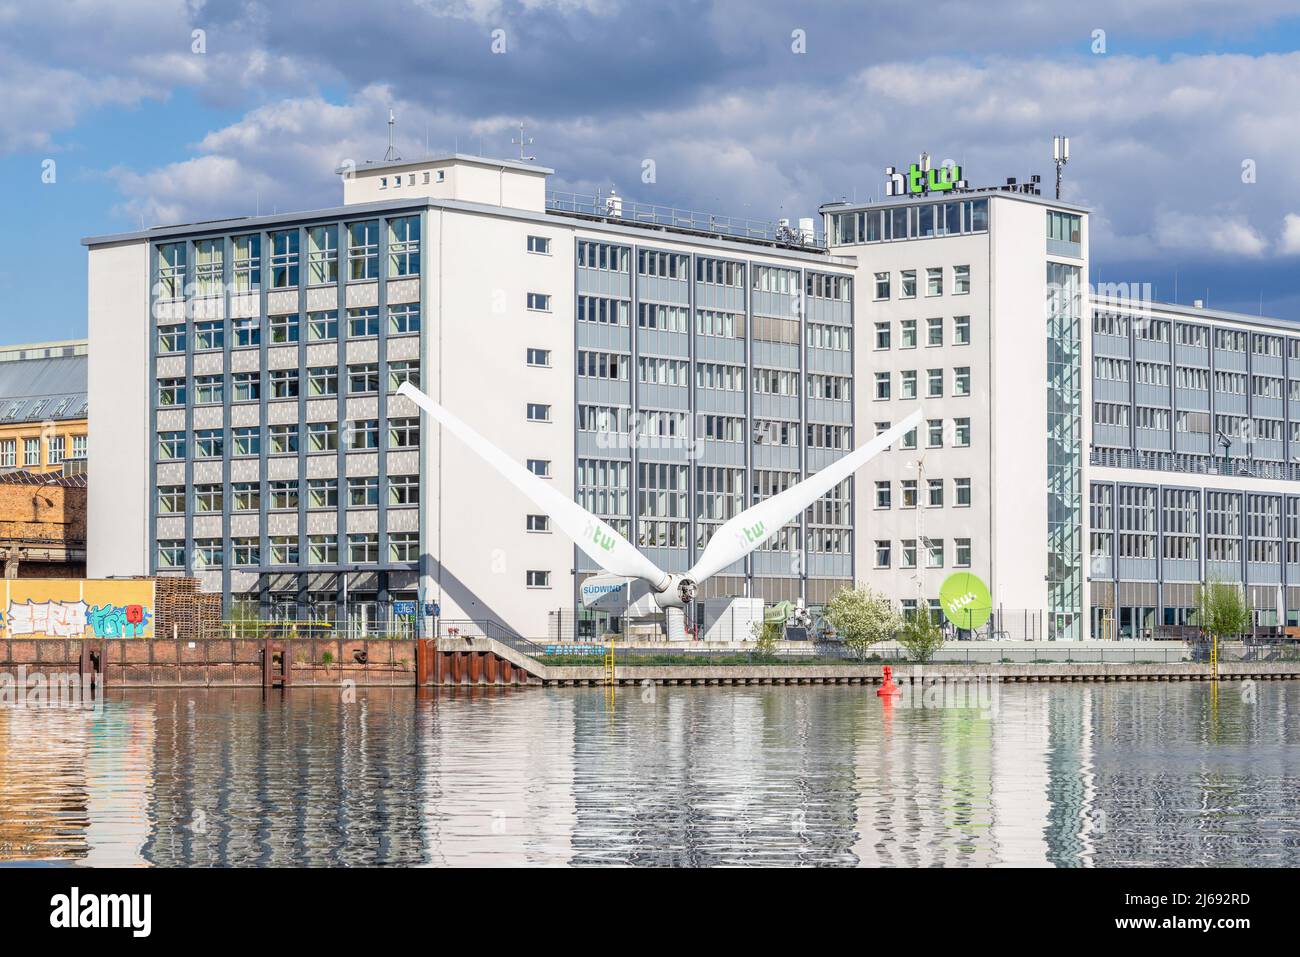 View across the river Spree to the University of Applied Sciences ( Hochschule für Technik und Wirtschaft - HTW) spring 2022, Berlin, Germany Stock Photo